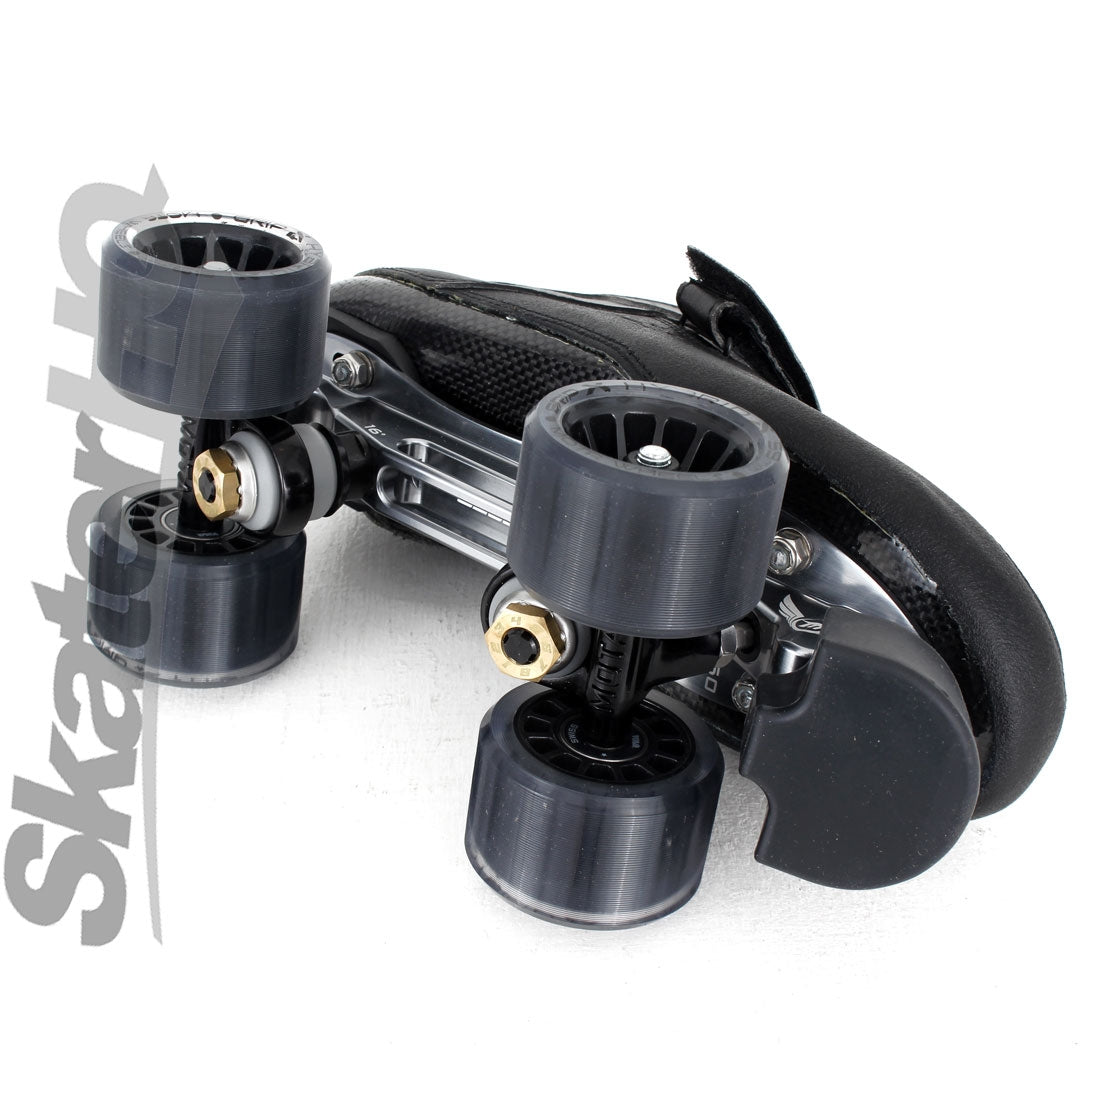 Mota Mojo Carbon Quad Skate 6US - Black Roller Skates